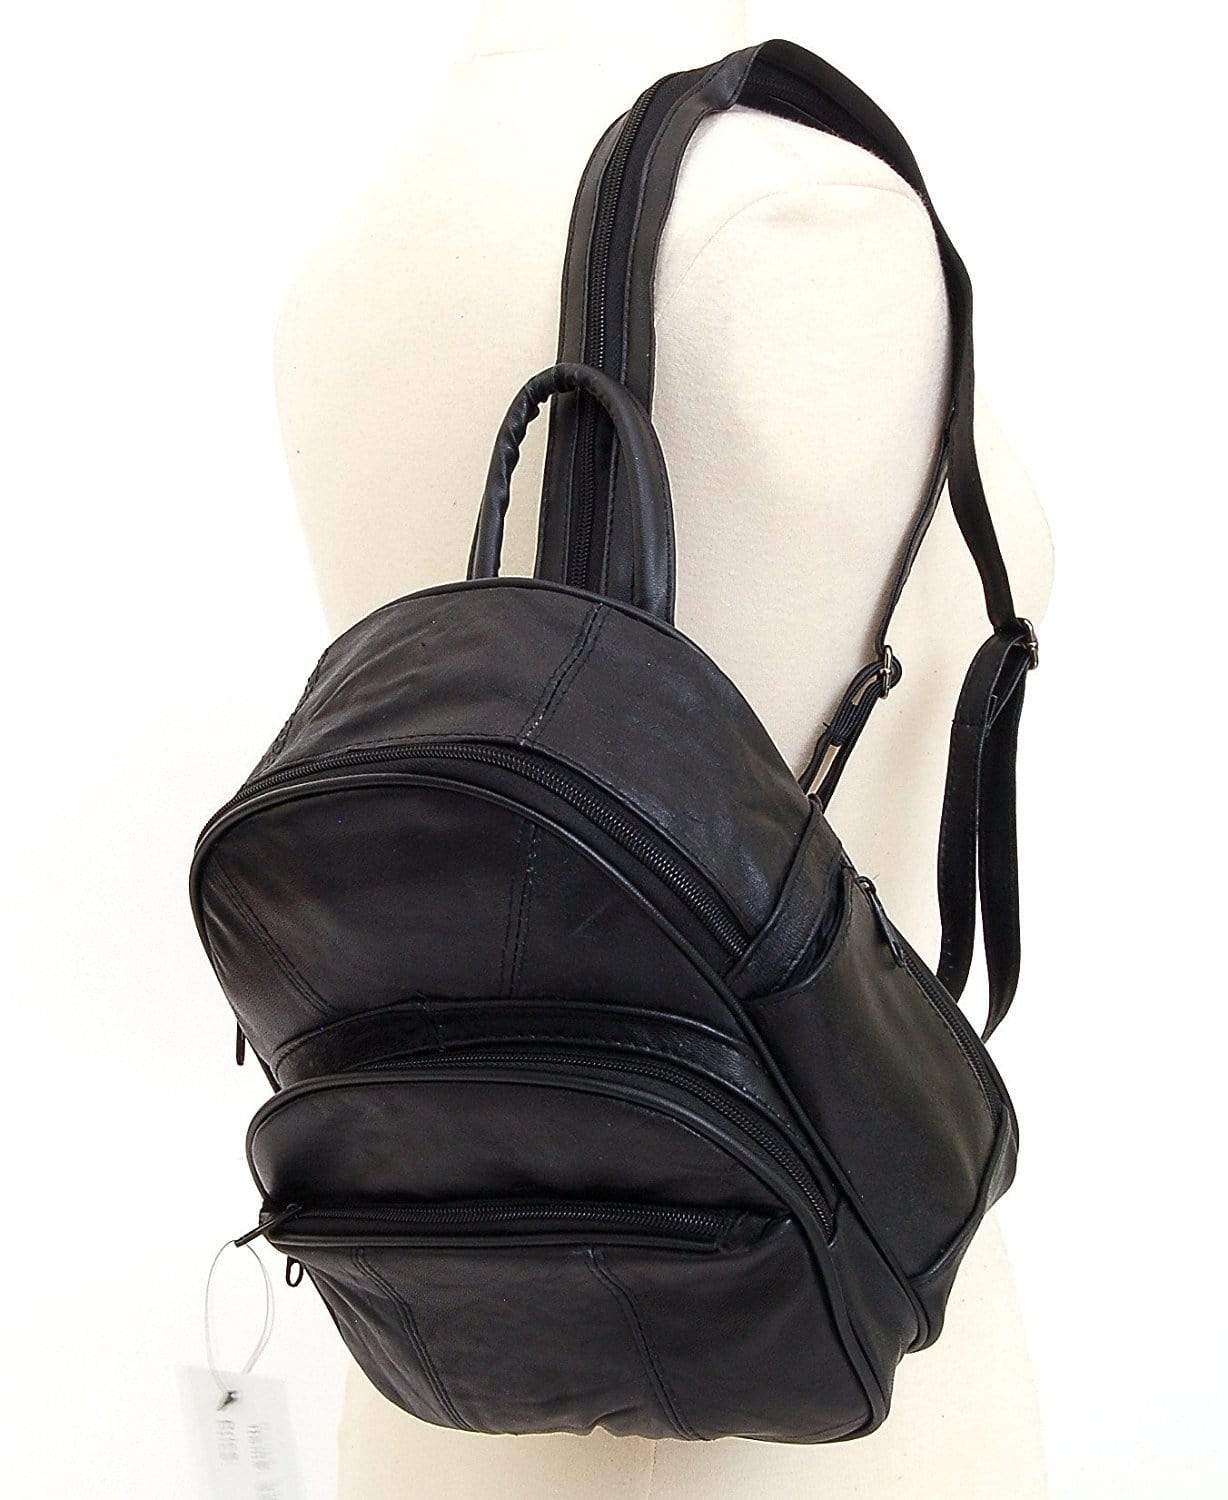 Vera Bradley Essential Sling Backpack / Purse Kauai Floral | eBay